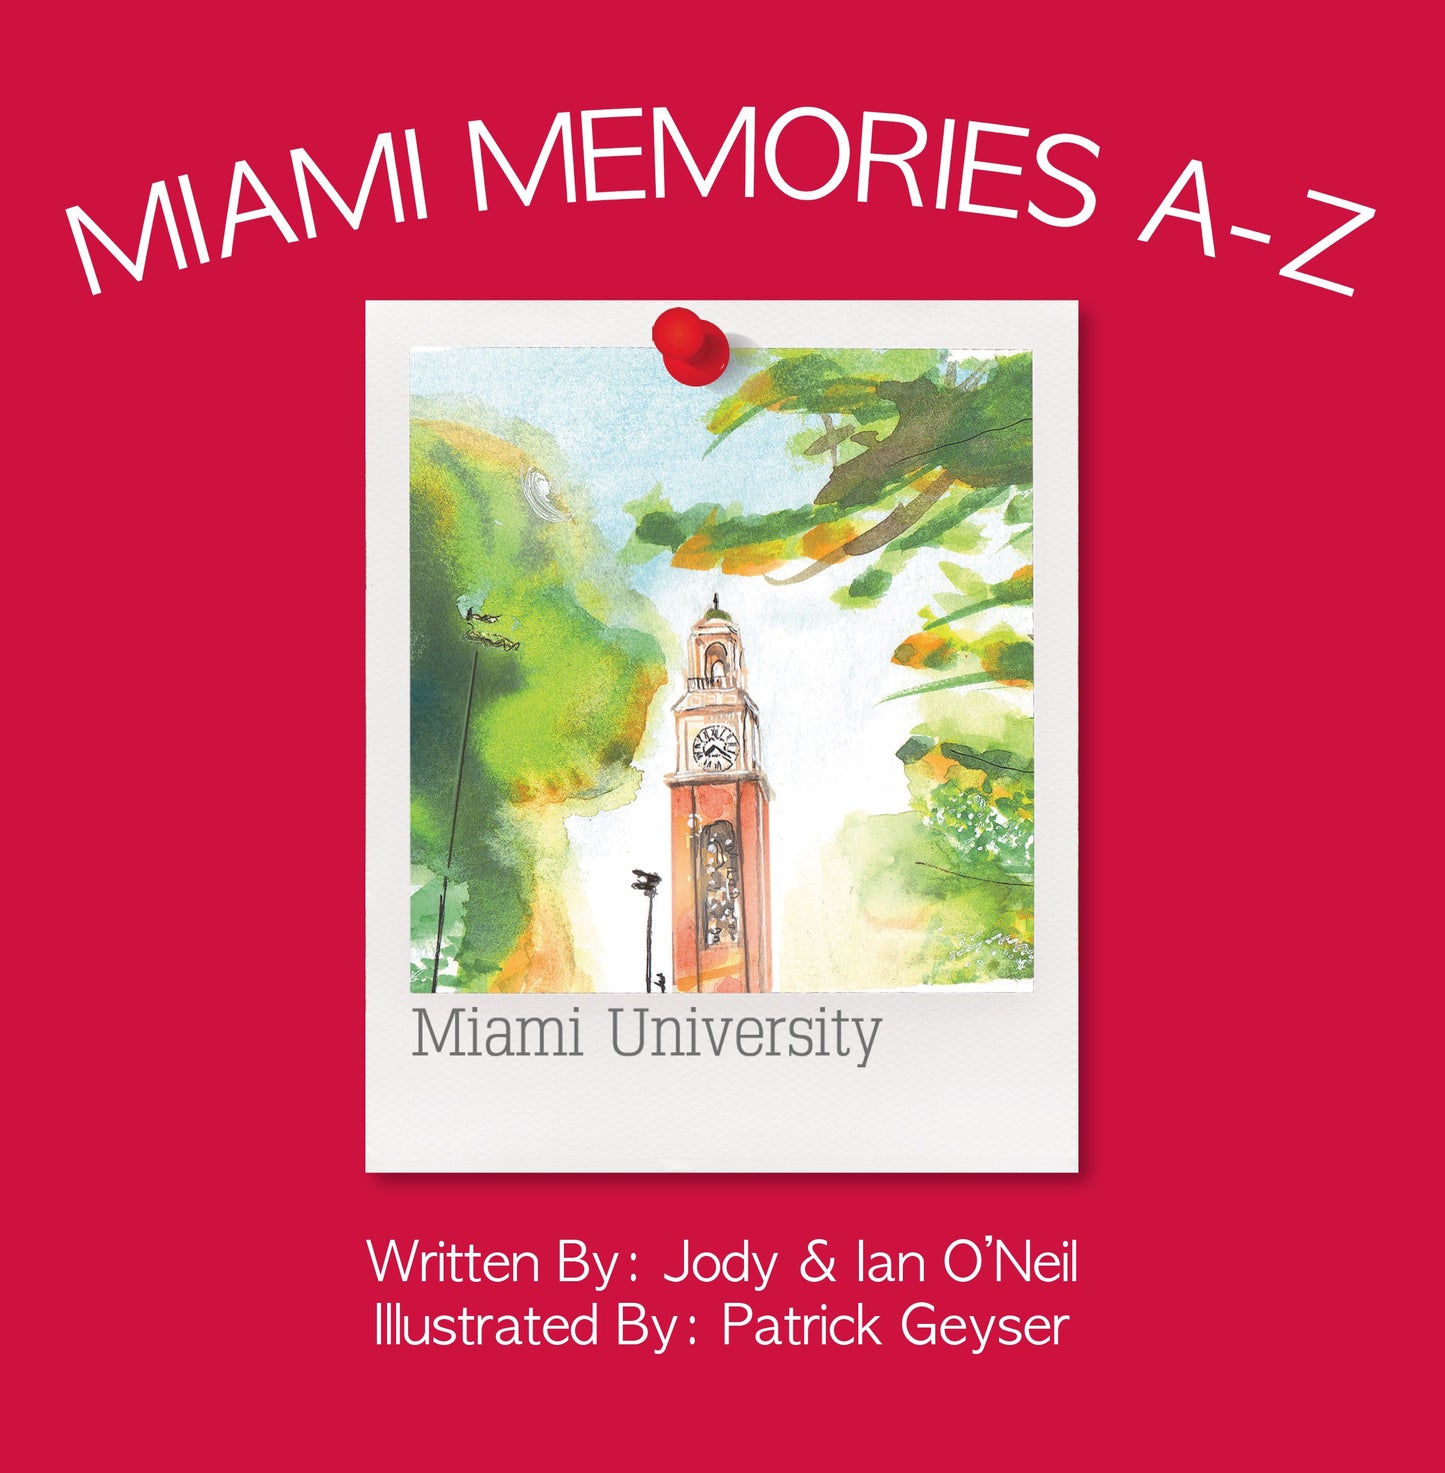 Purchase Here: Miami Memories A-Z